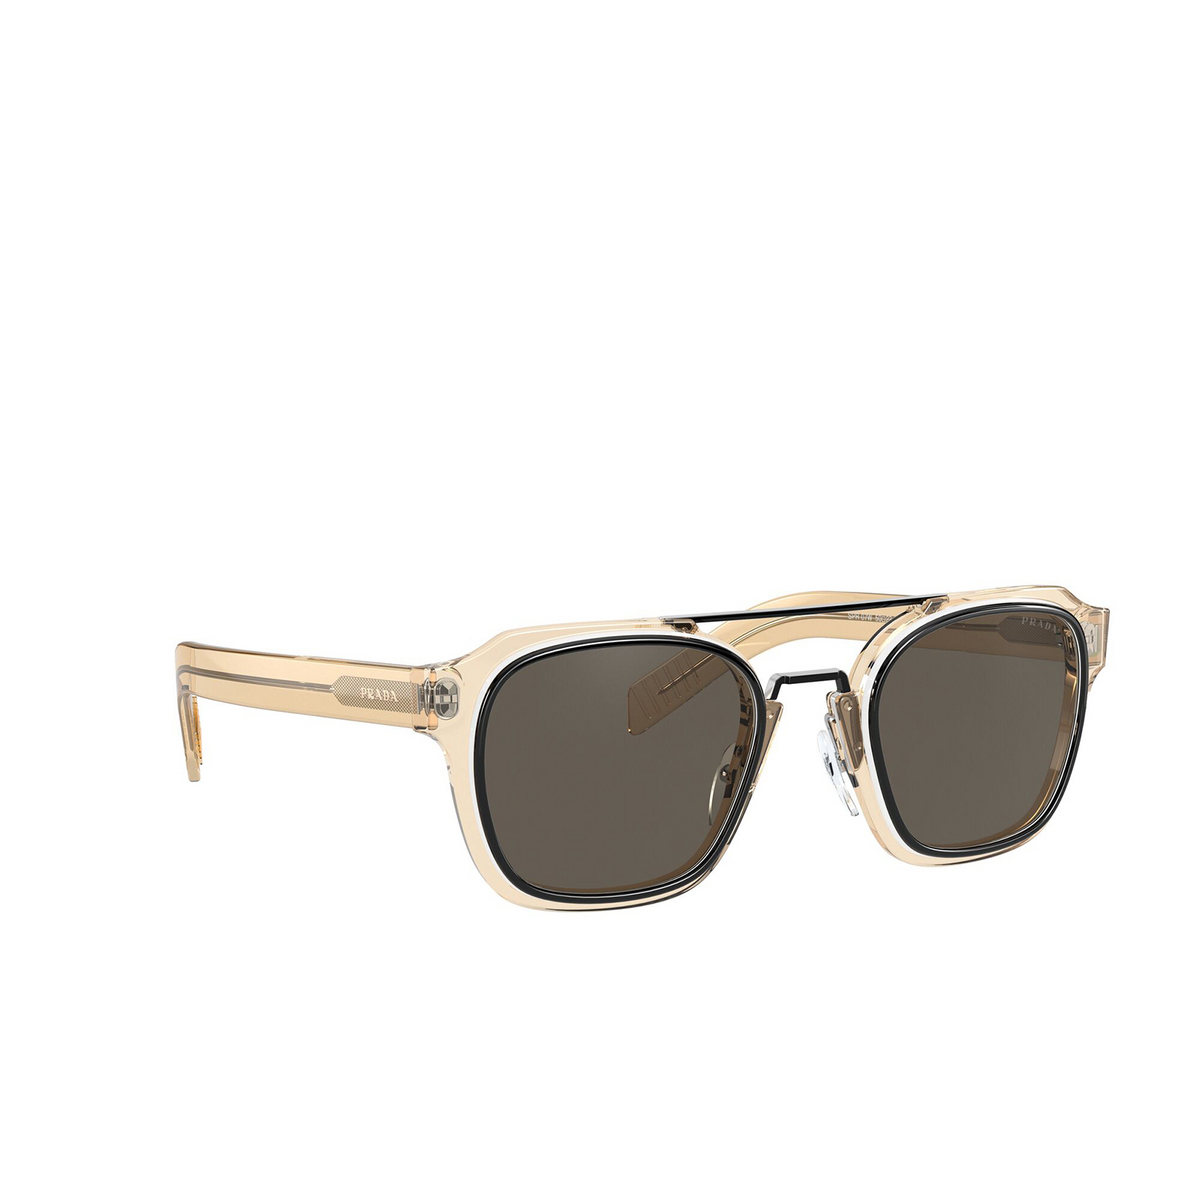 Prada® Square Sunglasses: PR 07WS color Black / White / Amber Crystal 05L5G1 - three-quarters view.